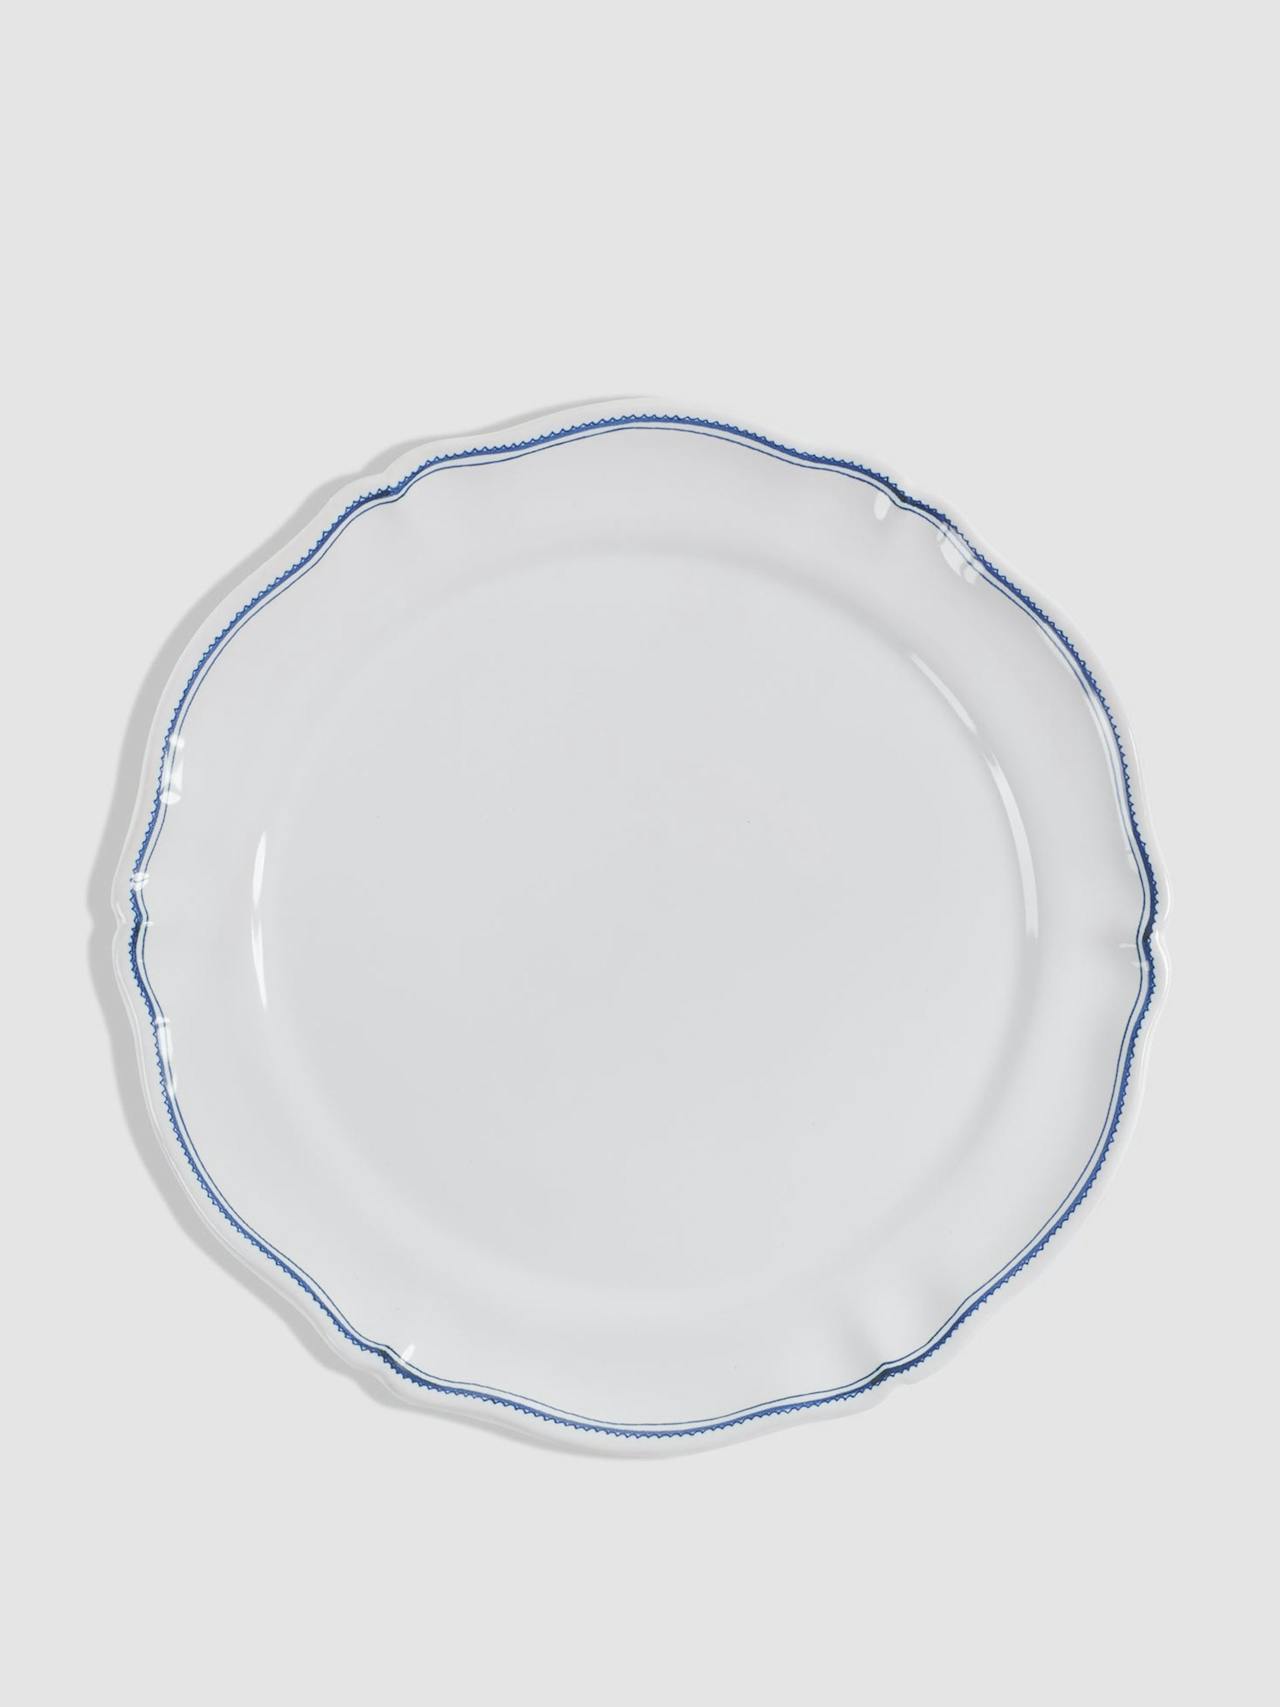 Blue Moustiers L'Horizon large dinner plate